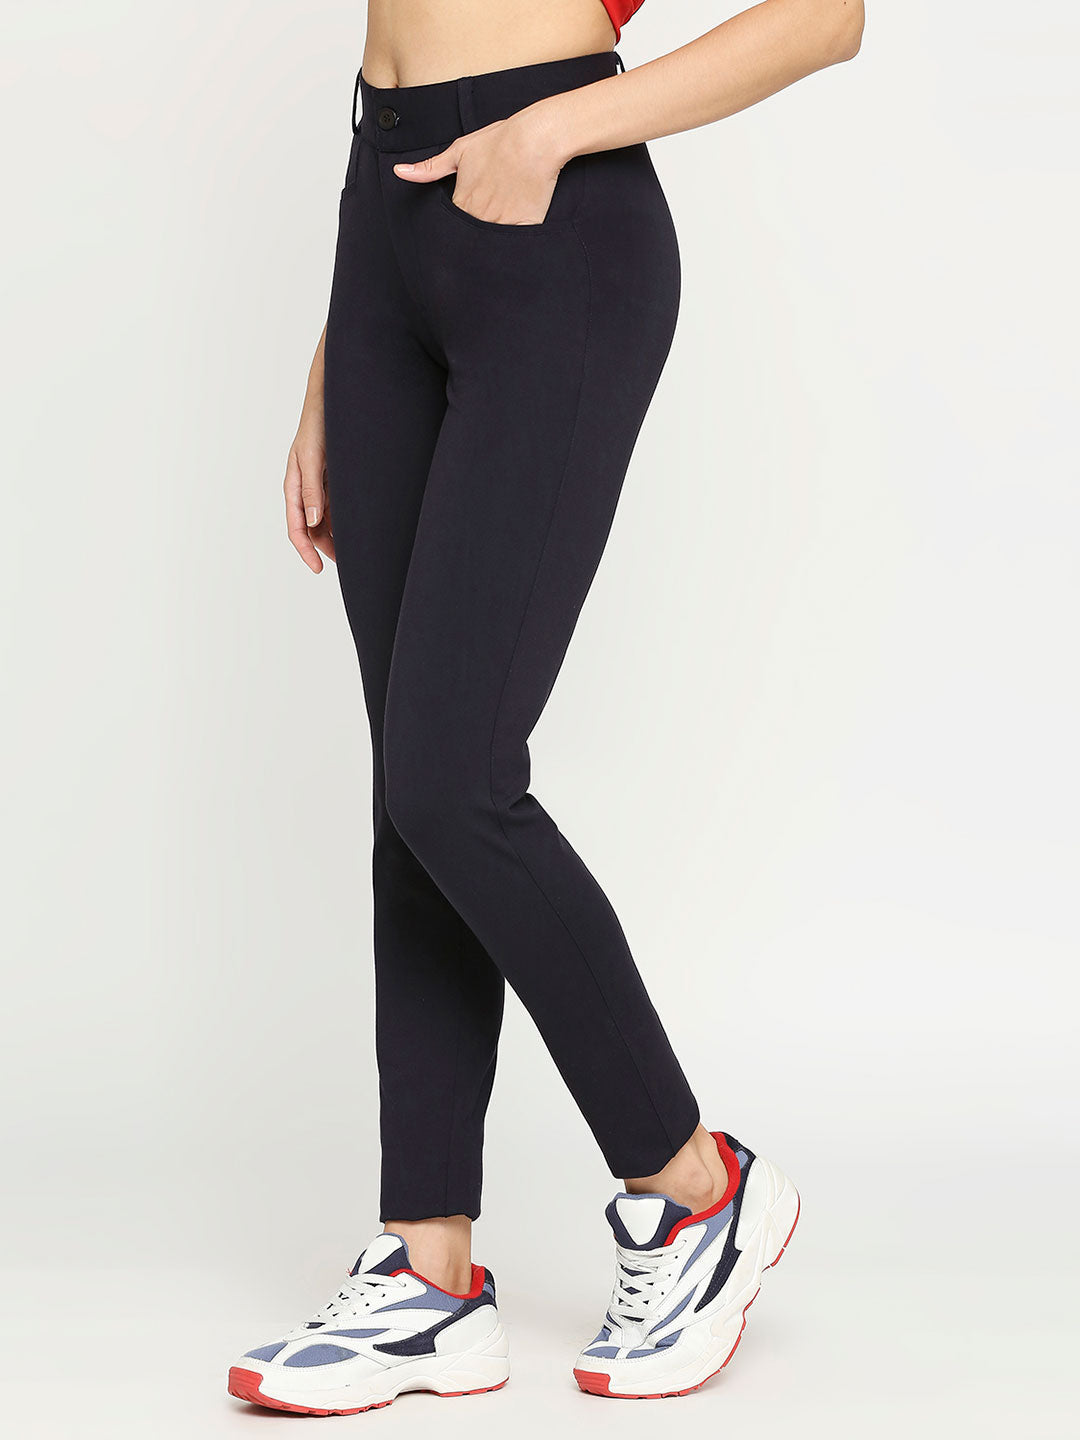 Women's Black Regular Golf Pants - Stylish and Comfortable | Sportsqvest